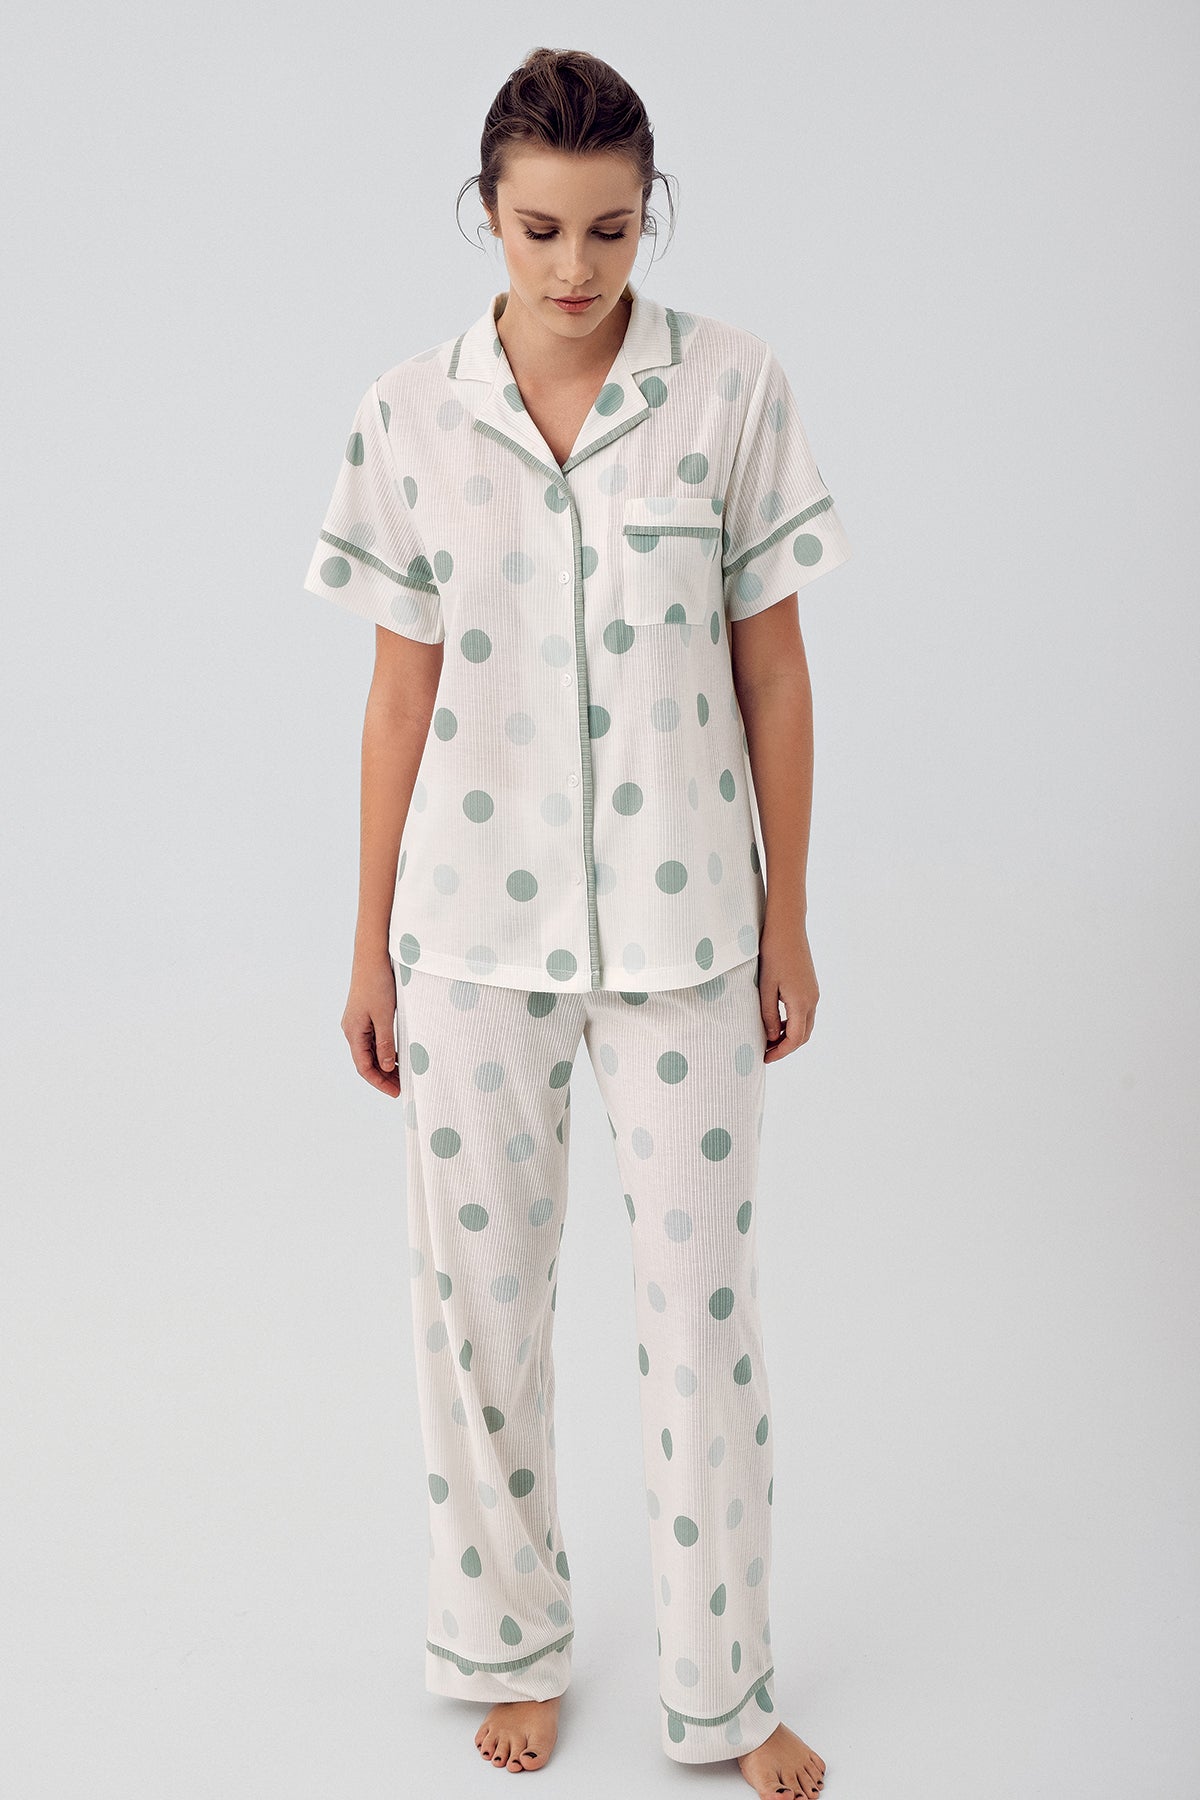 Shopymommy 16310 Polka Dot 3-Pieces Maternity & Nursing Pajamas With Robe Green